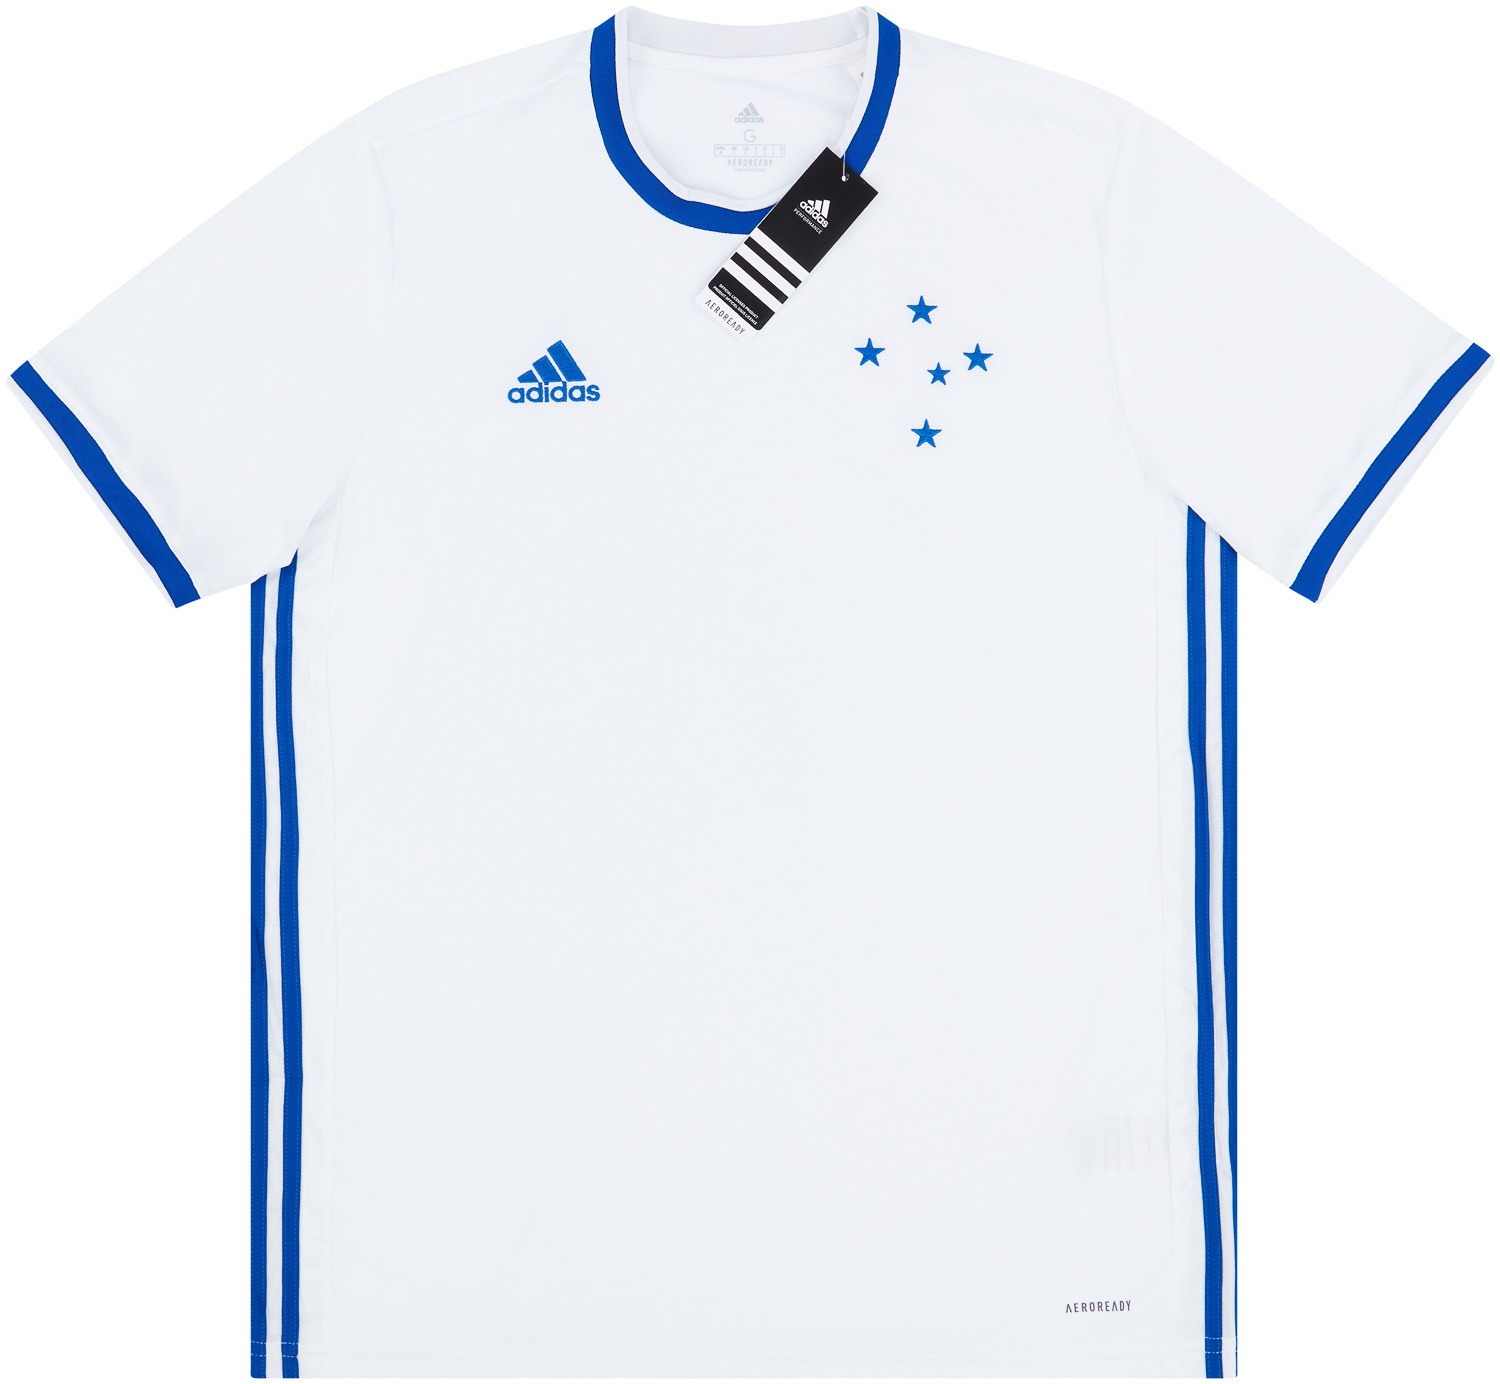 Cruzeiro  Uit  shirt  (Original)